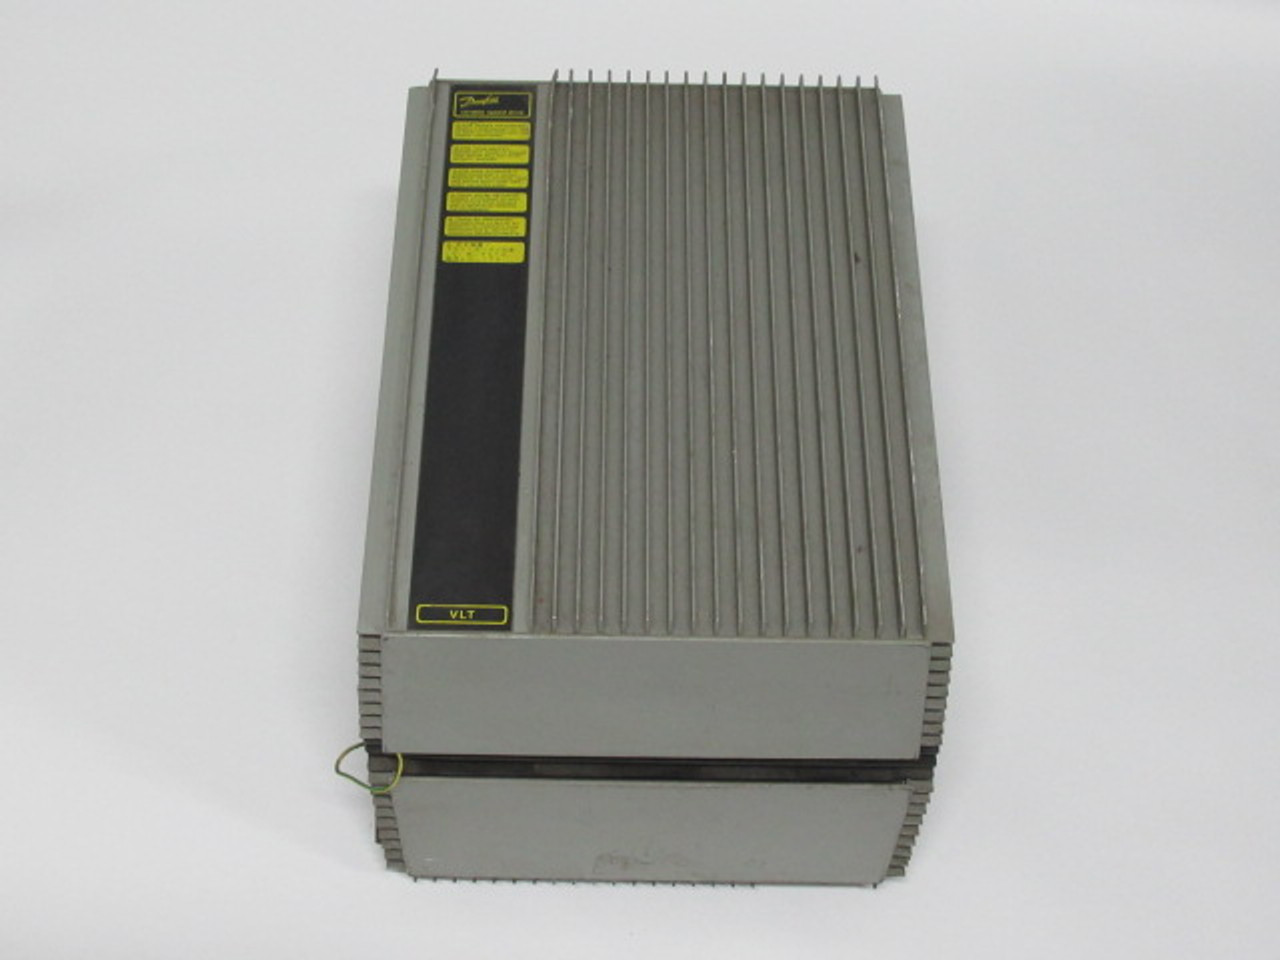 Danfoss VLT-103-175B6401 Variable Speed Drive 3Ph 440/460V 5.3A/5.1A USED